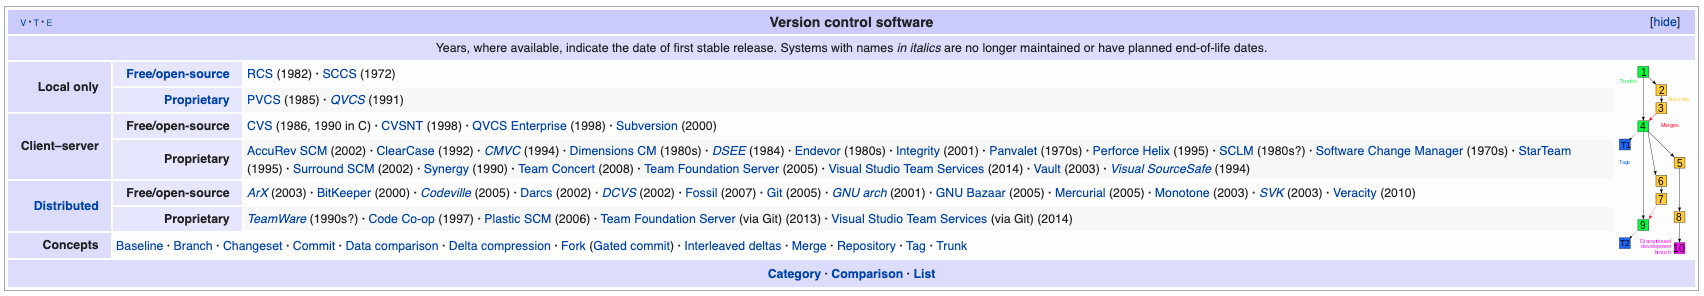 wikipedia-version-control-software-list